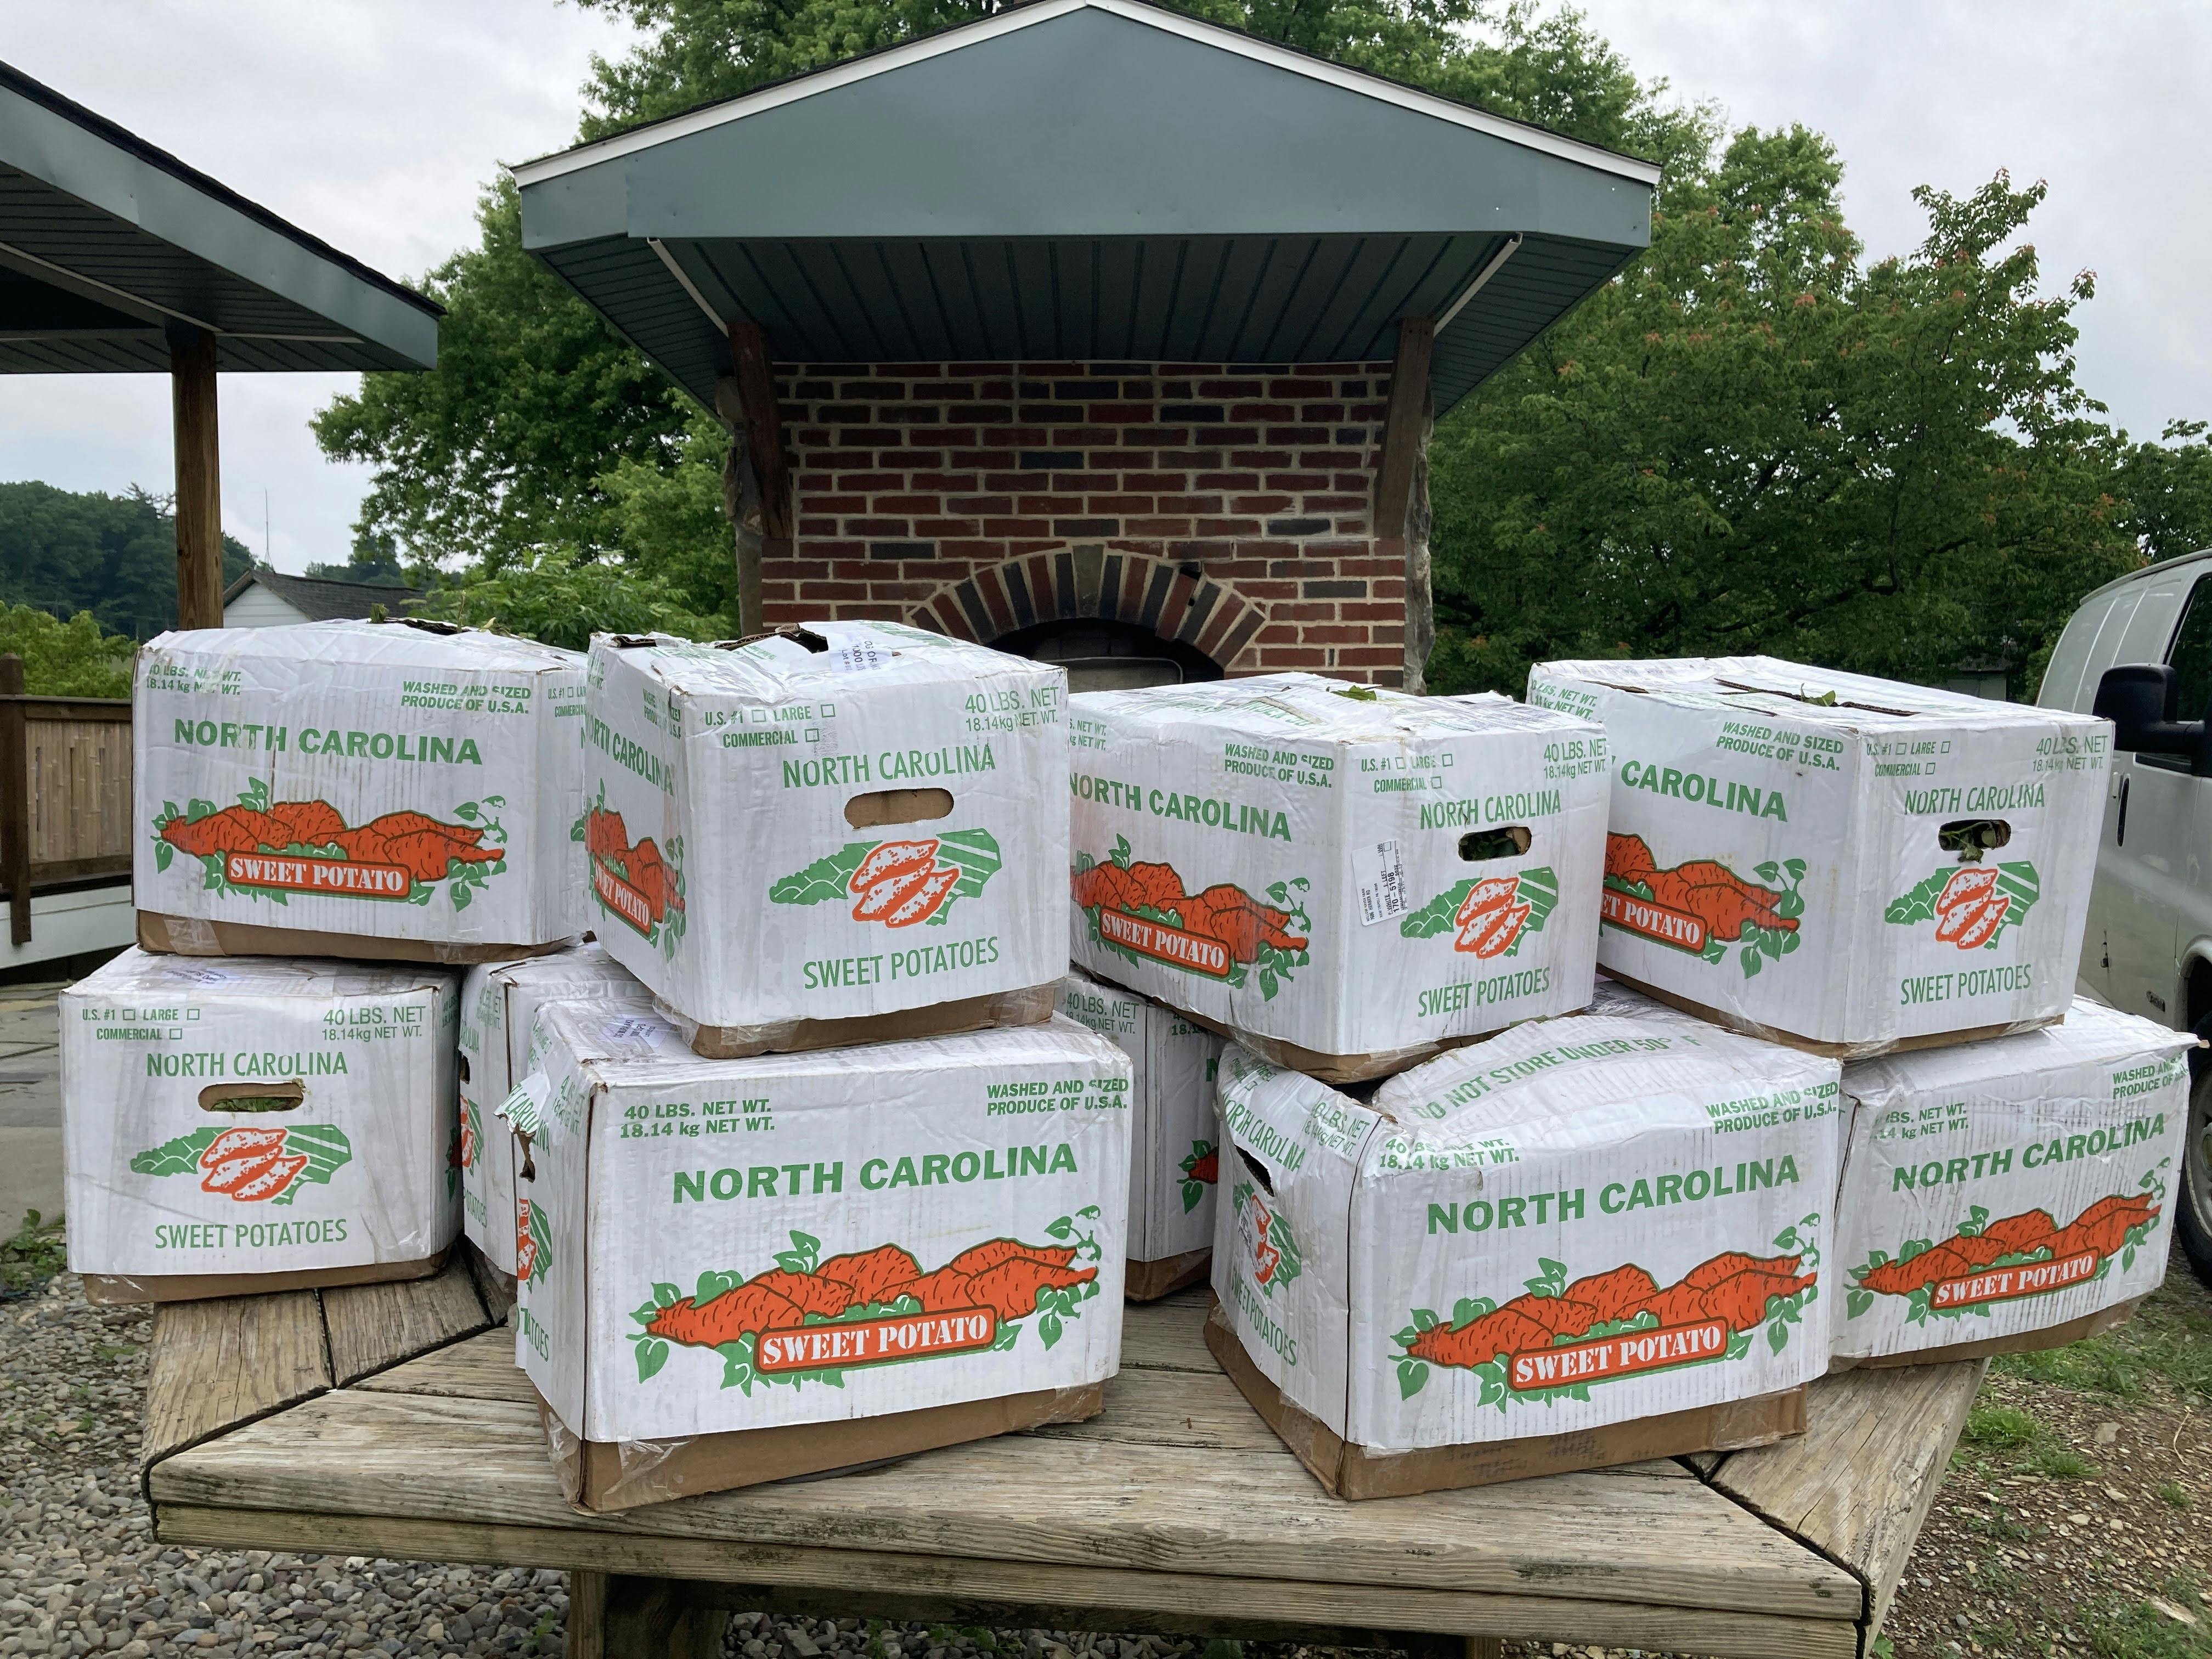 10000 sweet potato plants arrived 